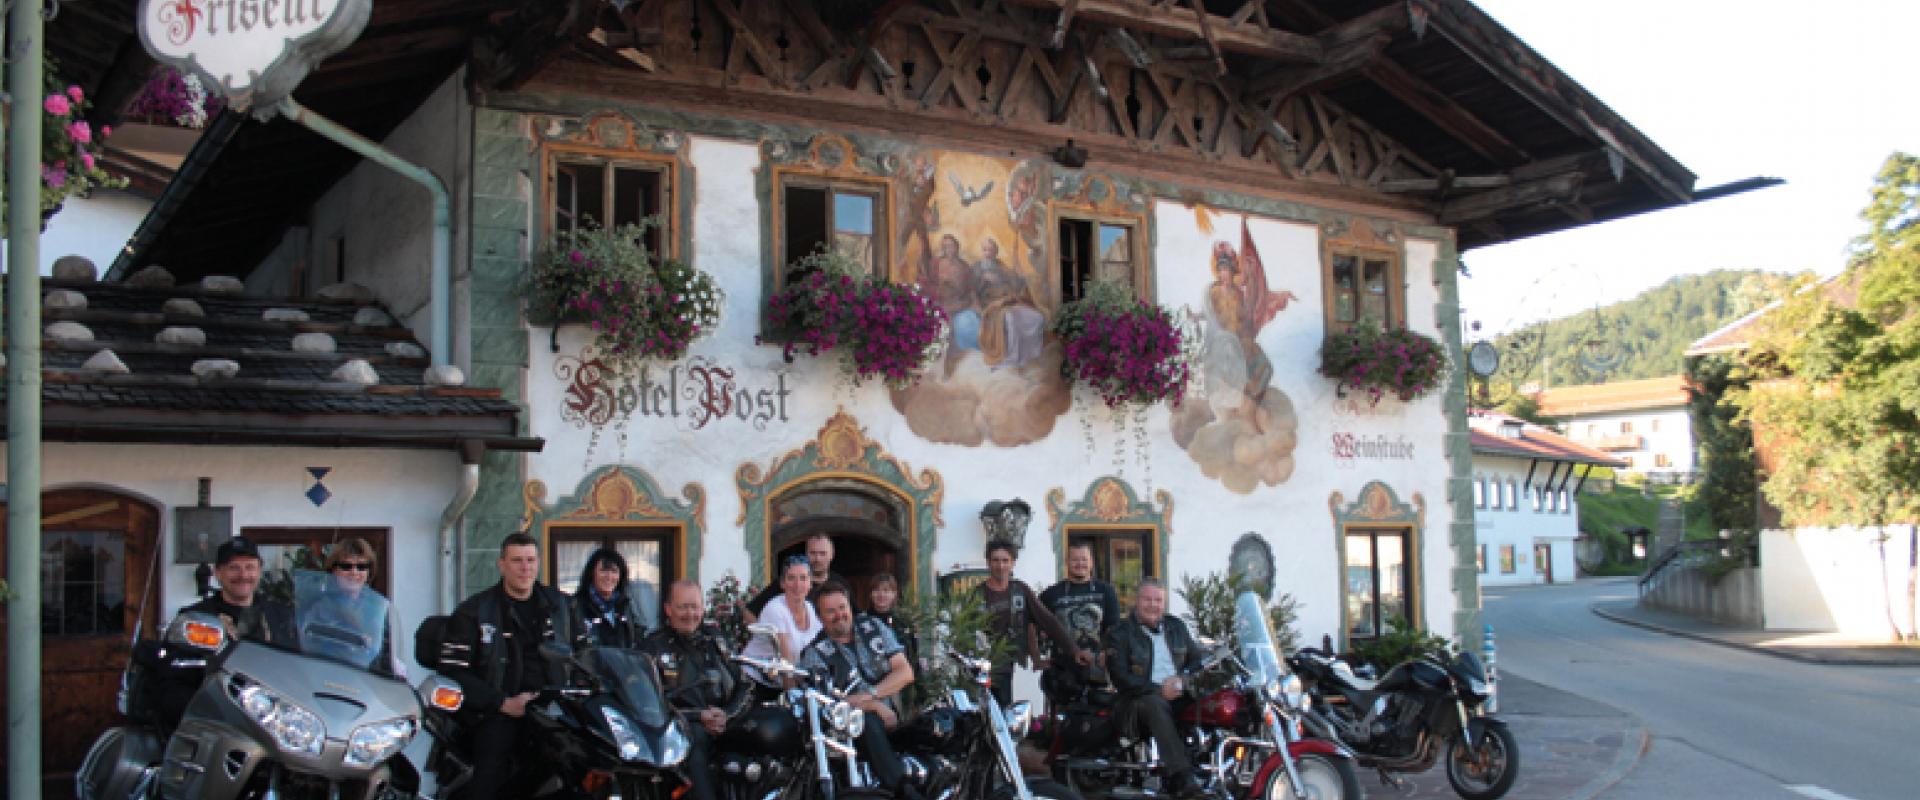 13641 Biker Hotel Zur Post in Oberbayern.jpg